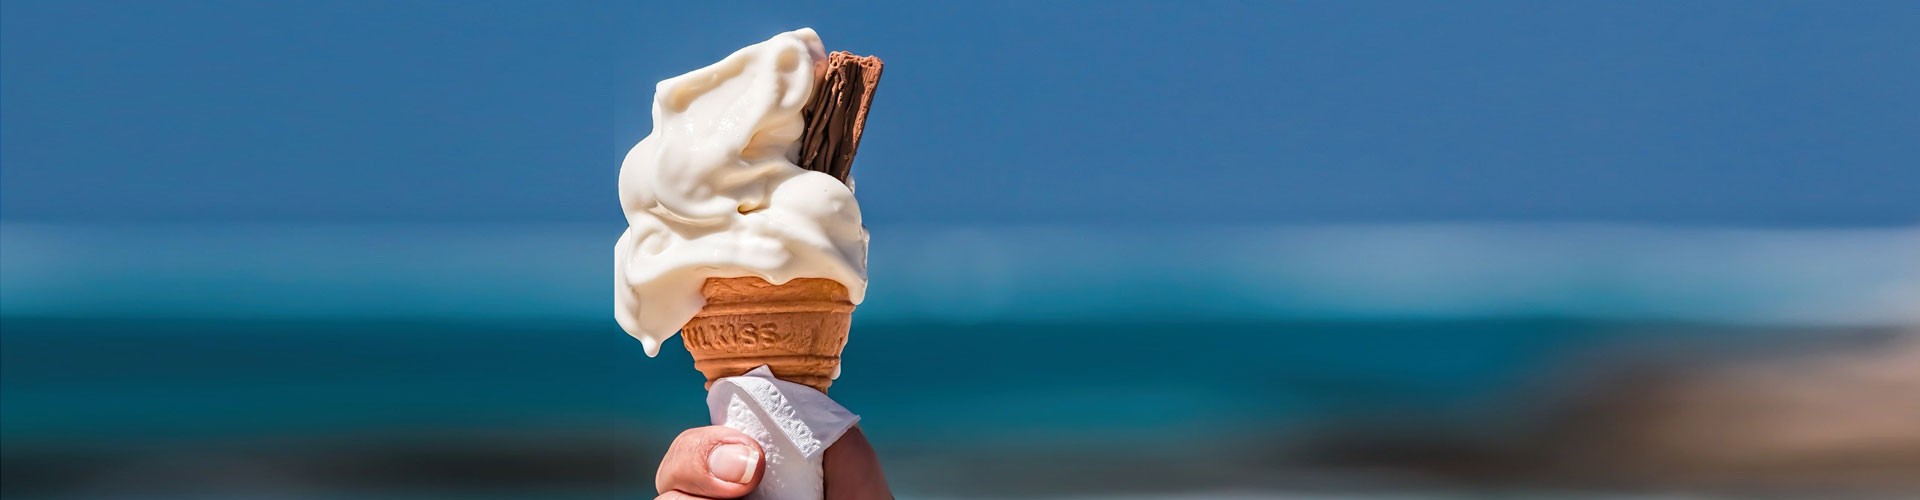 ice cream cone against blurred seascape background